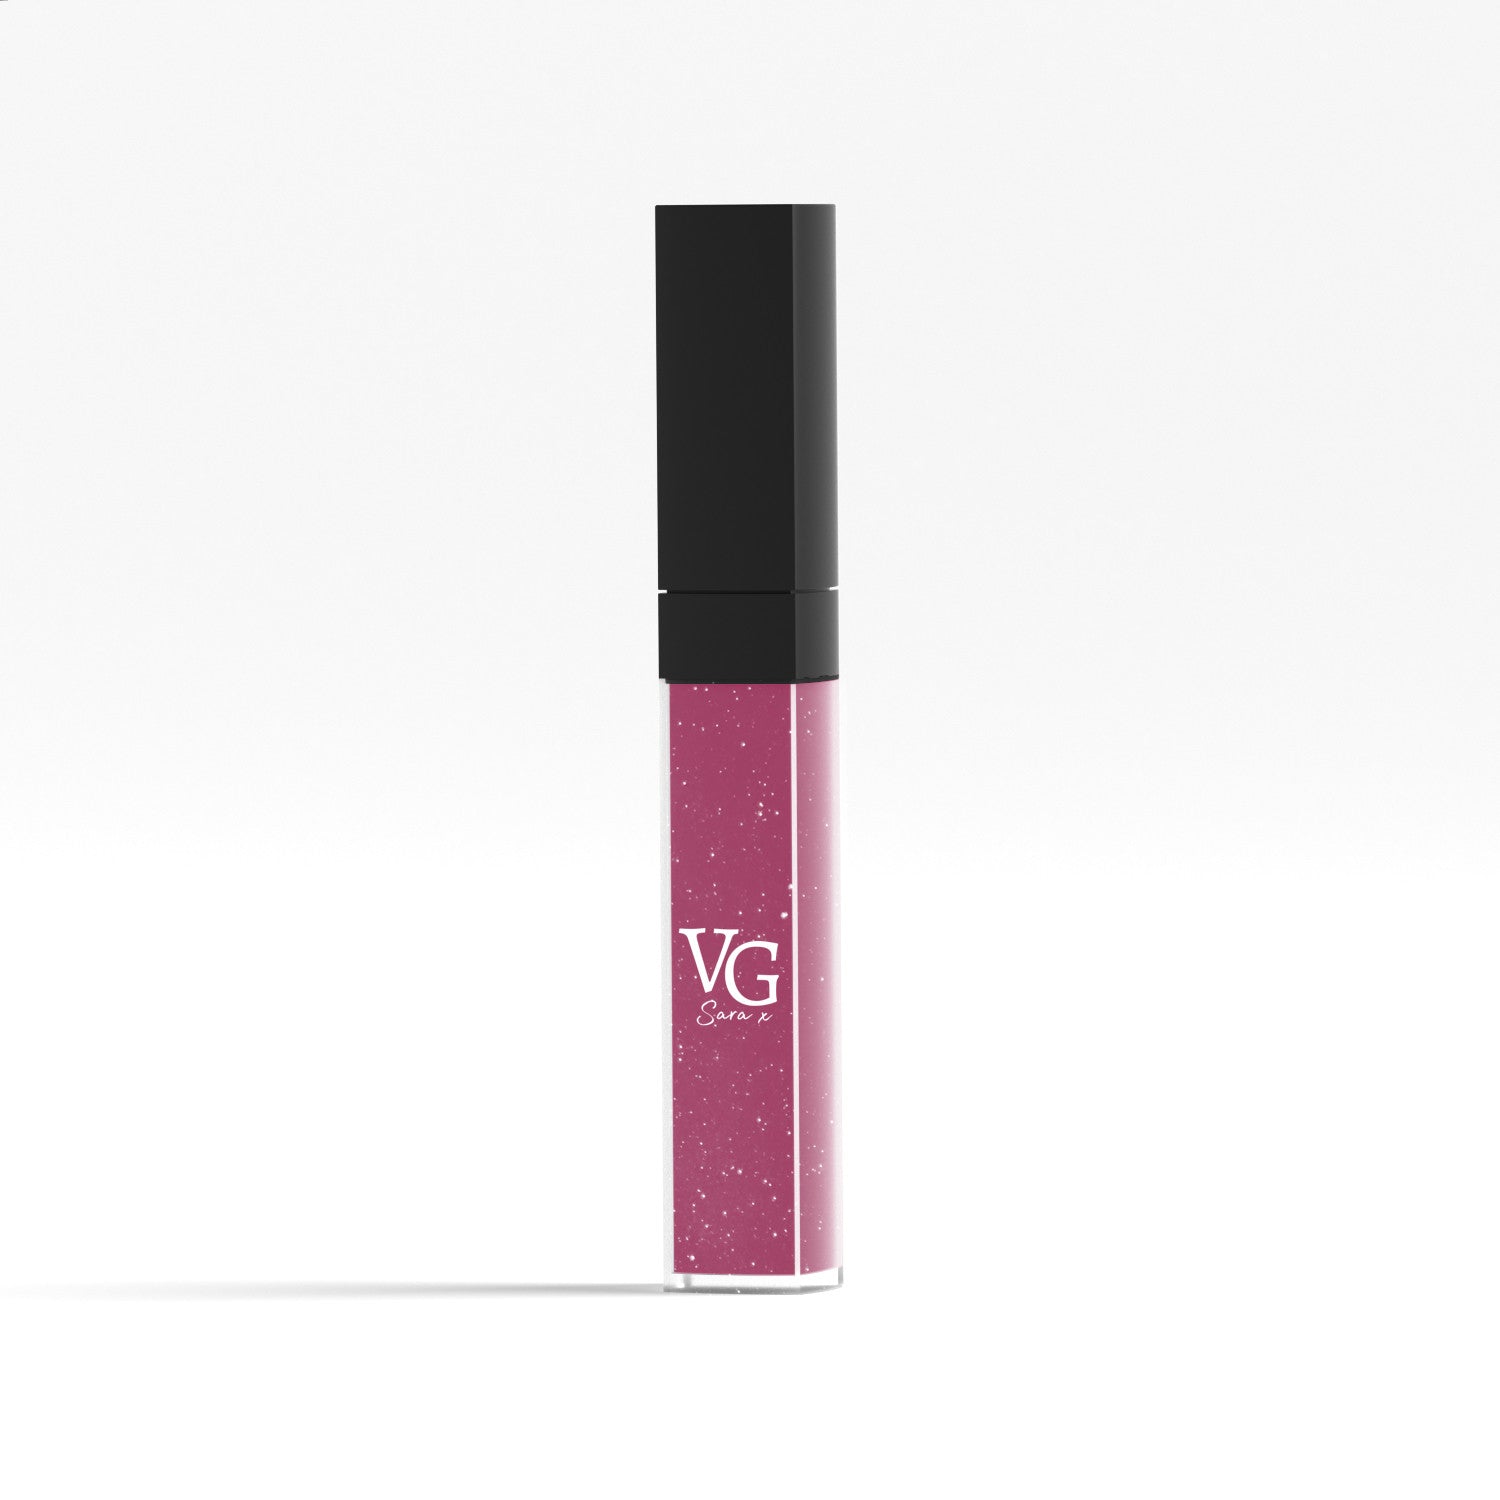 VG branded vegan liquid lipstick in soft pink shade